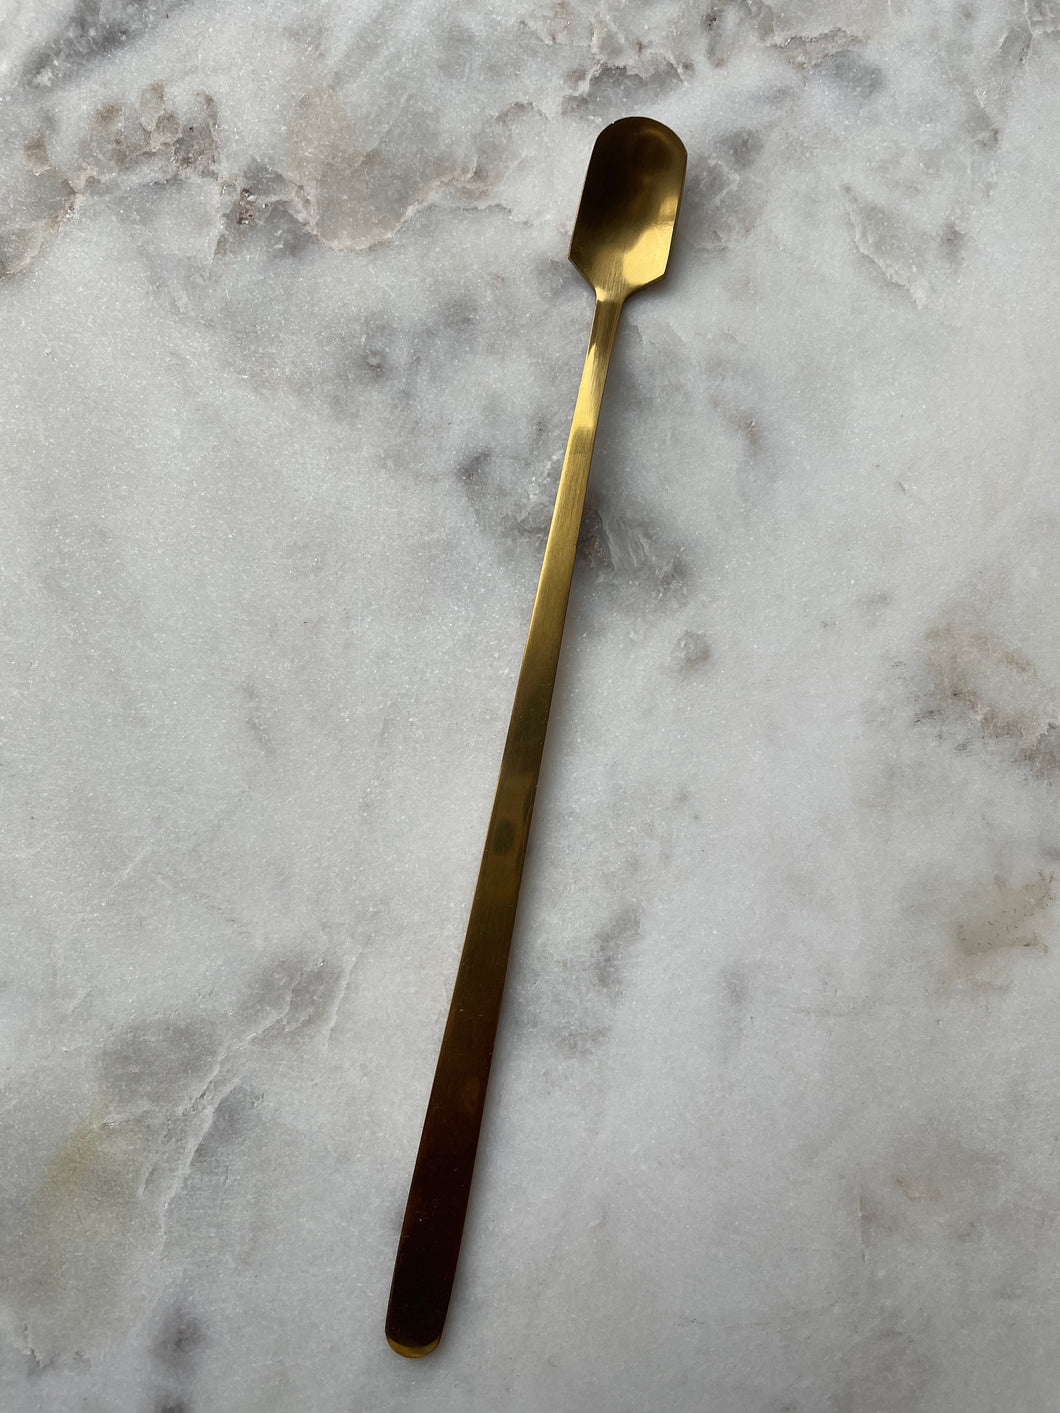 Long Stainless Steel Spoon